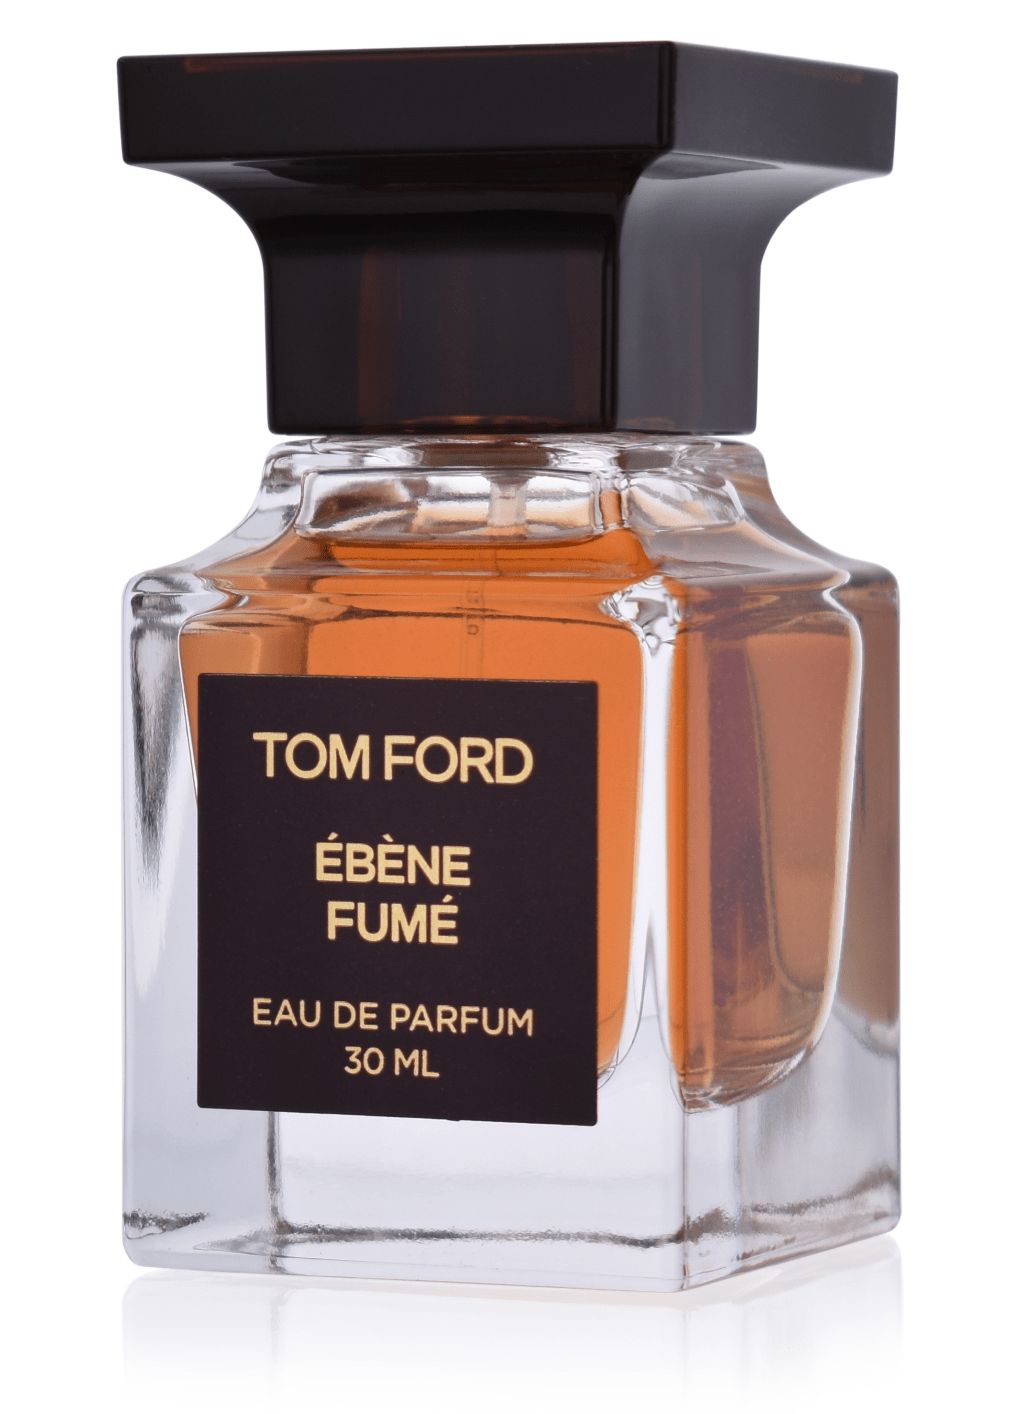 Tom Ford Ebene Fume 30 ml Eau de Parfum  